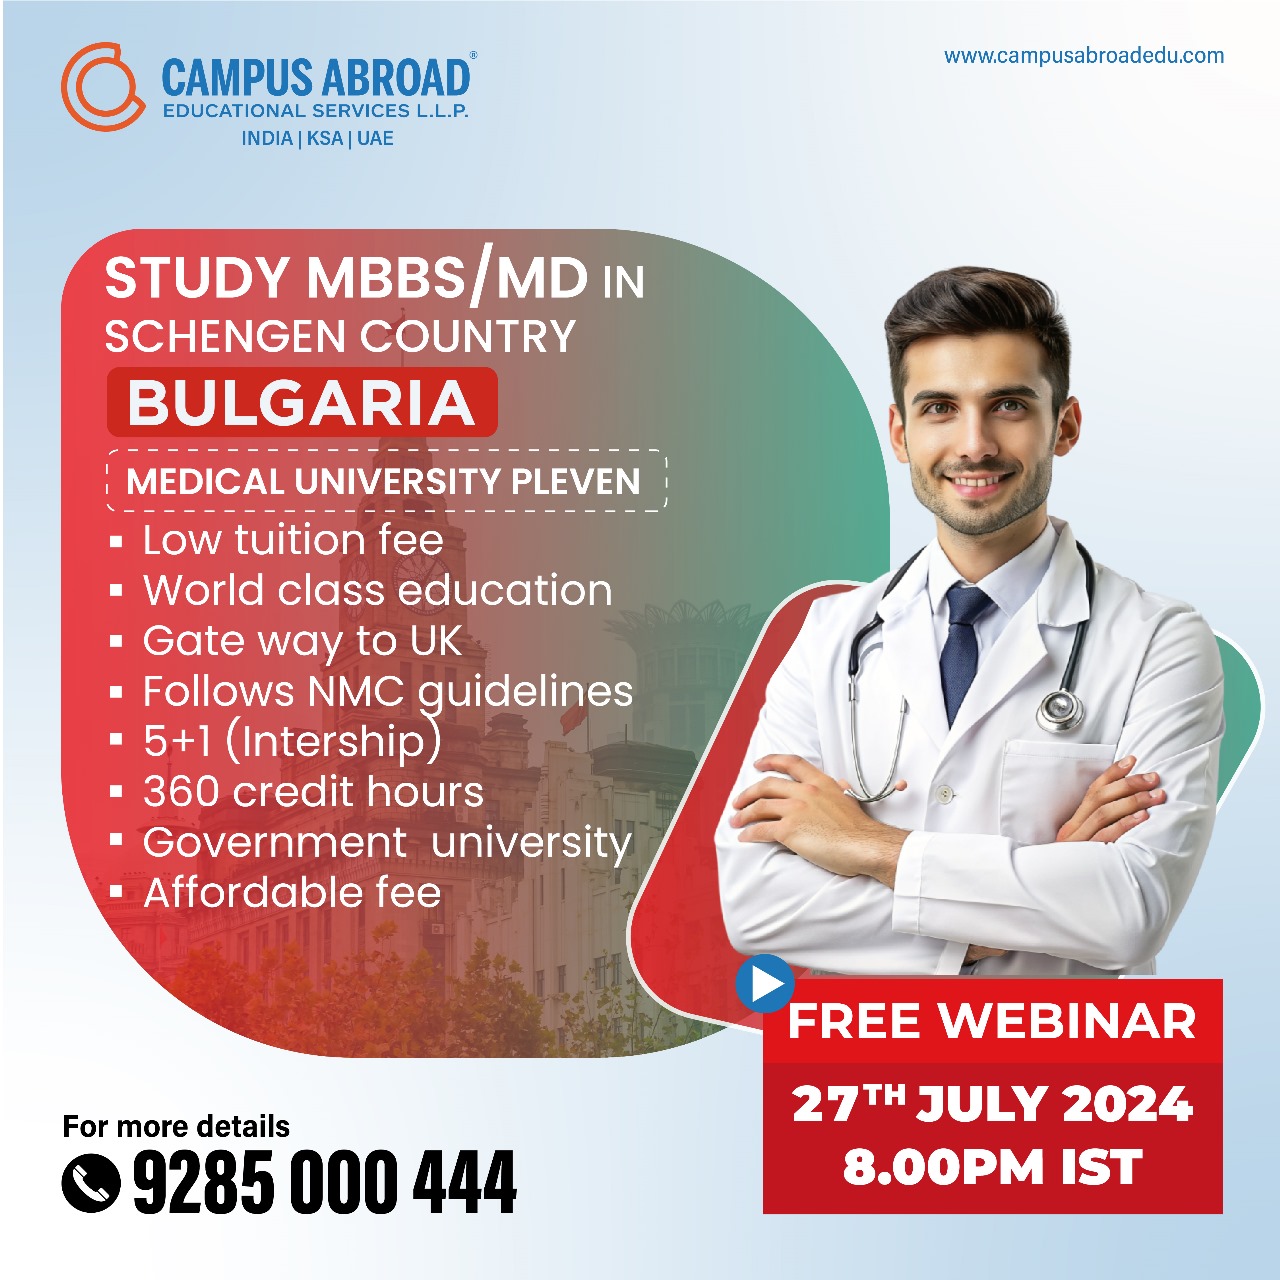 STUDY MBBS IN BULGARIA